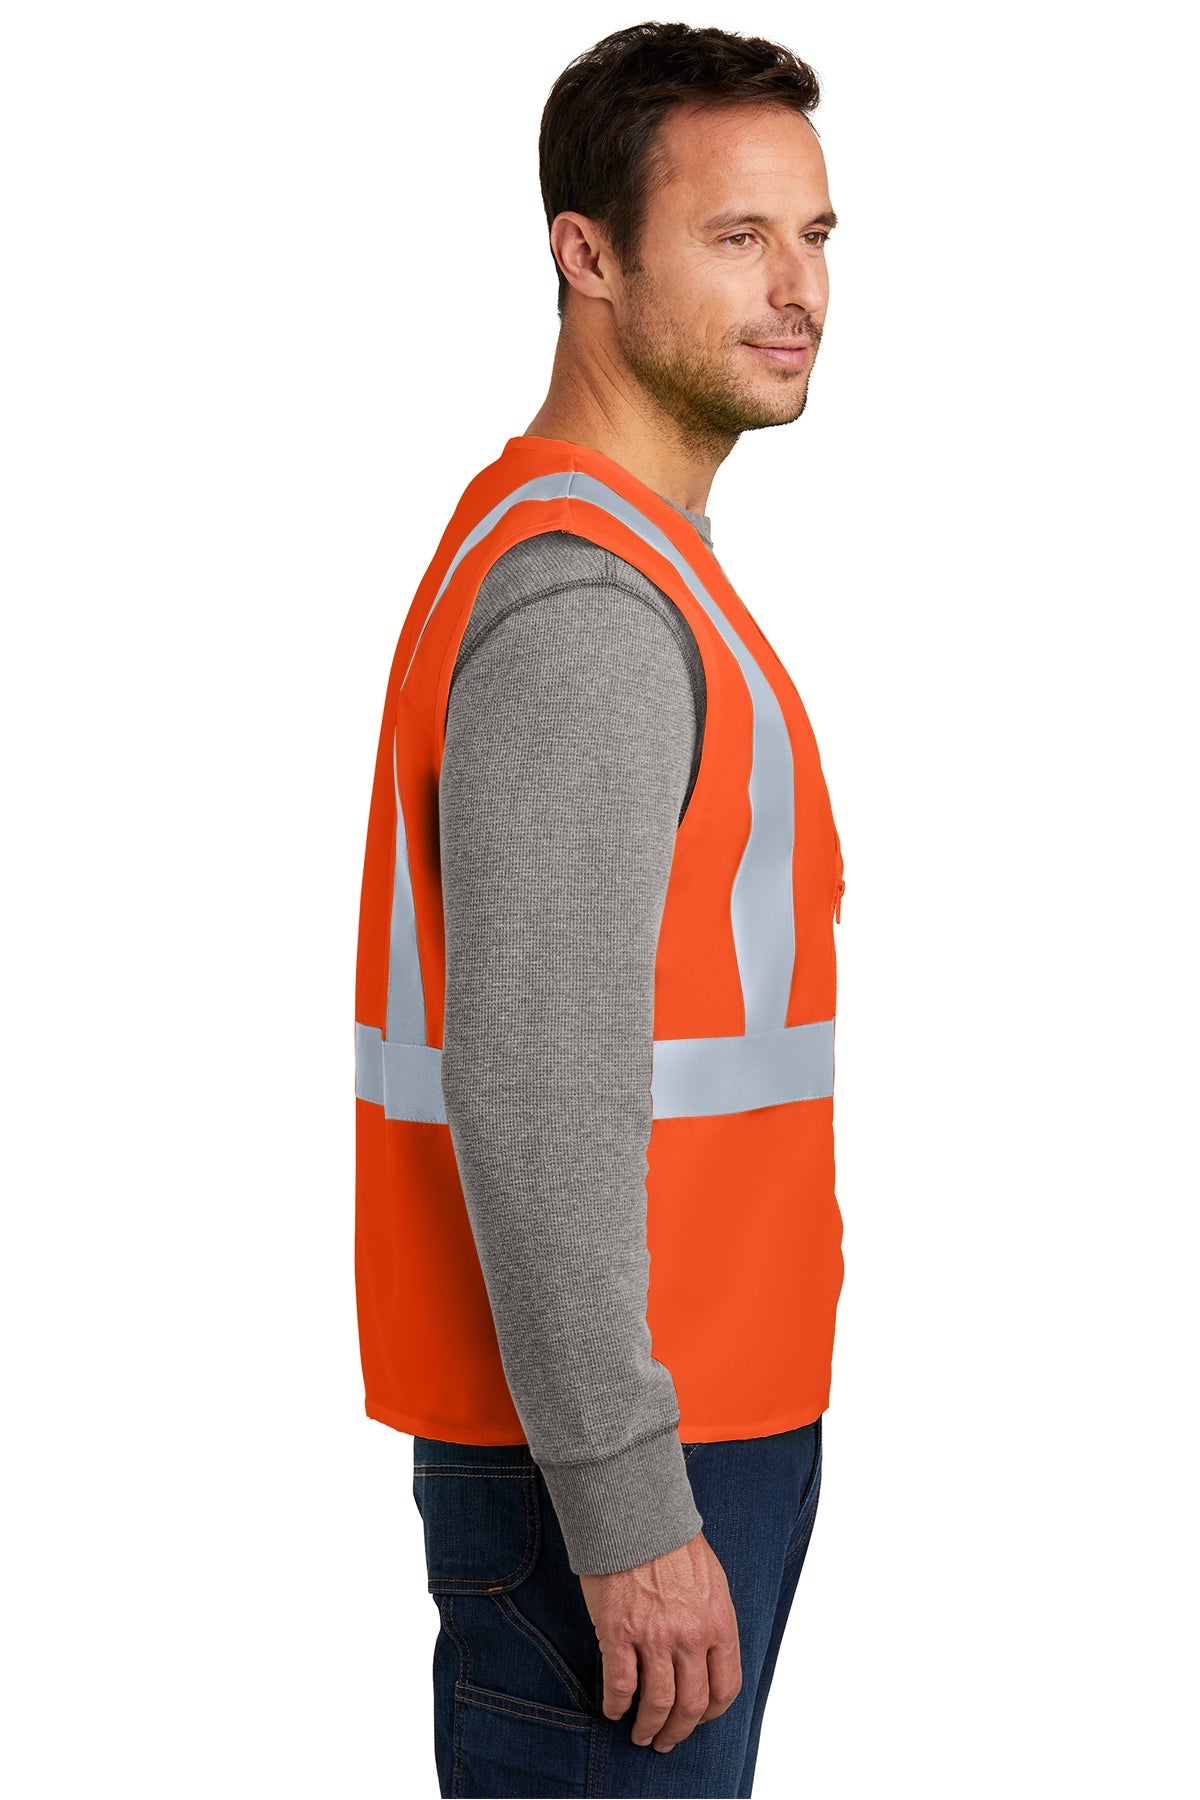 cornerstone_csv400 _safety orange/ reflective_company_logo_jackets